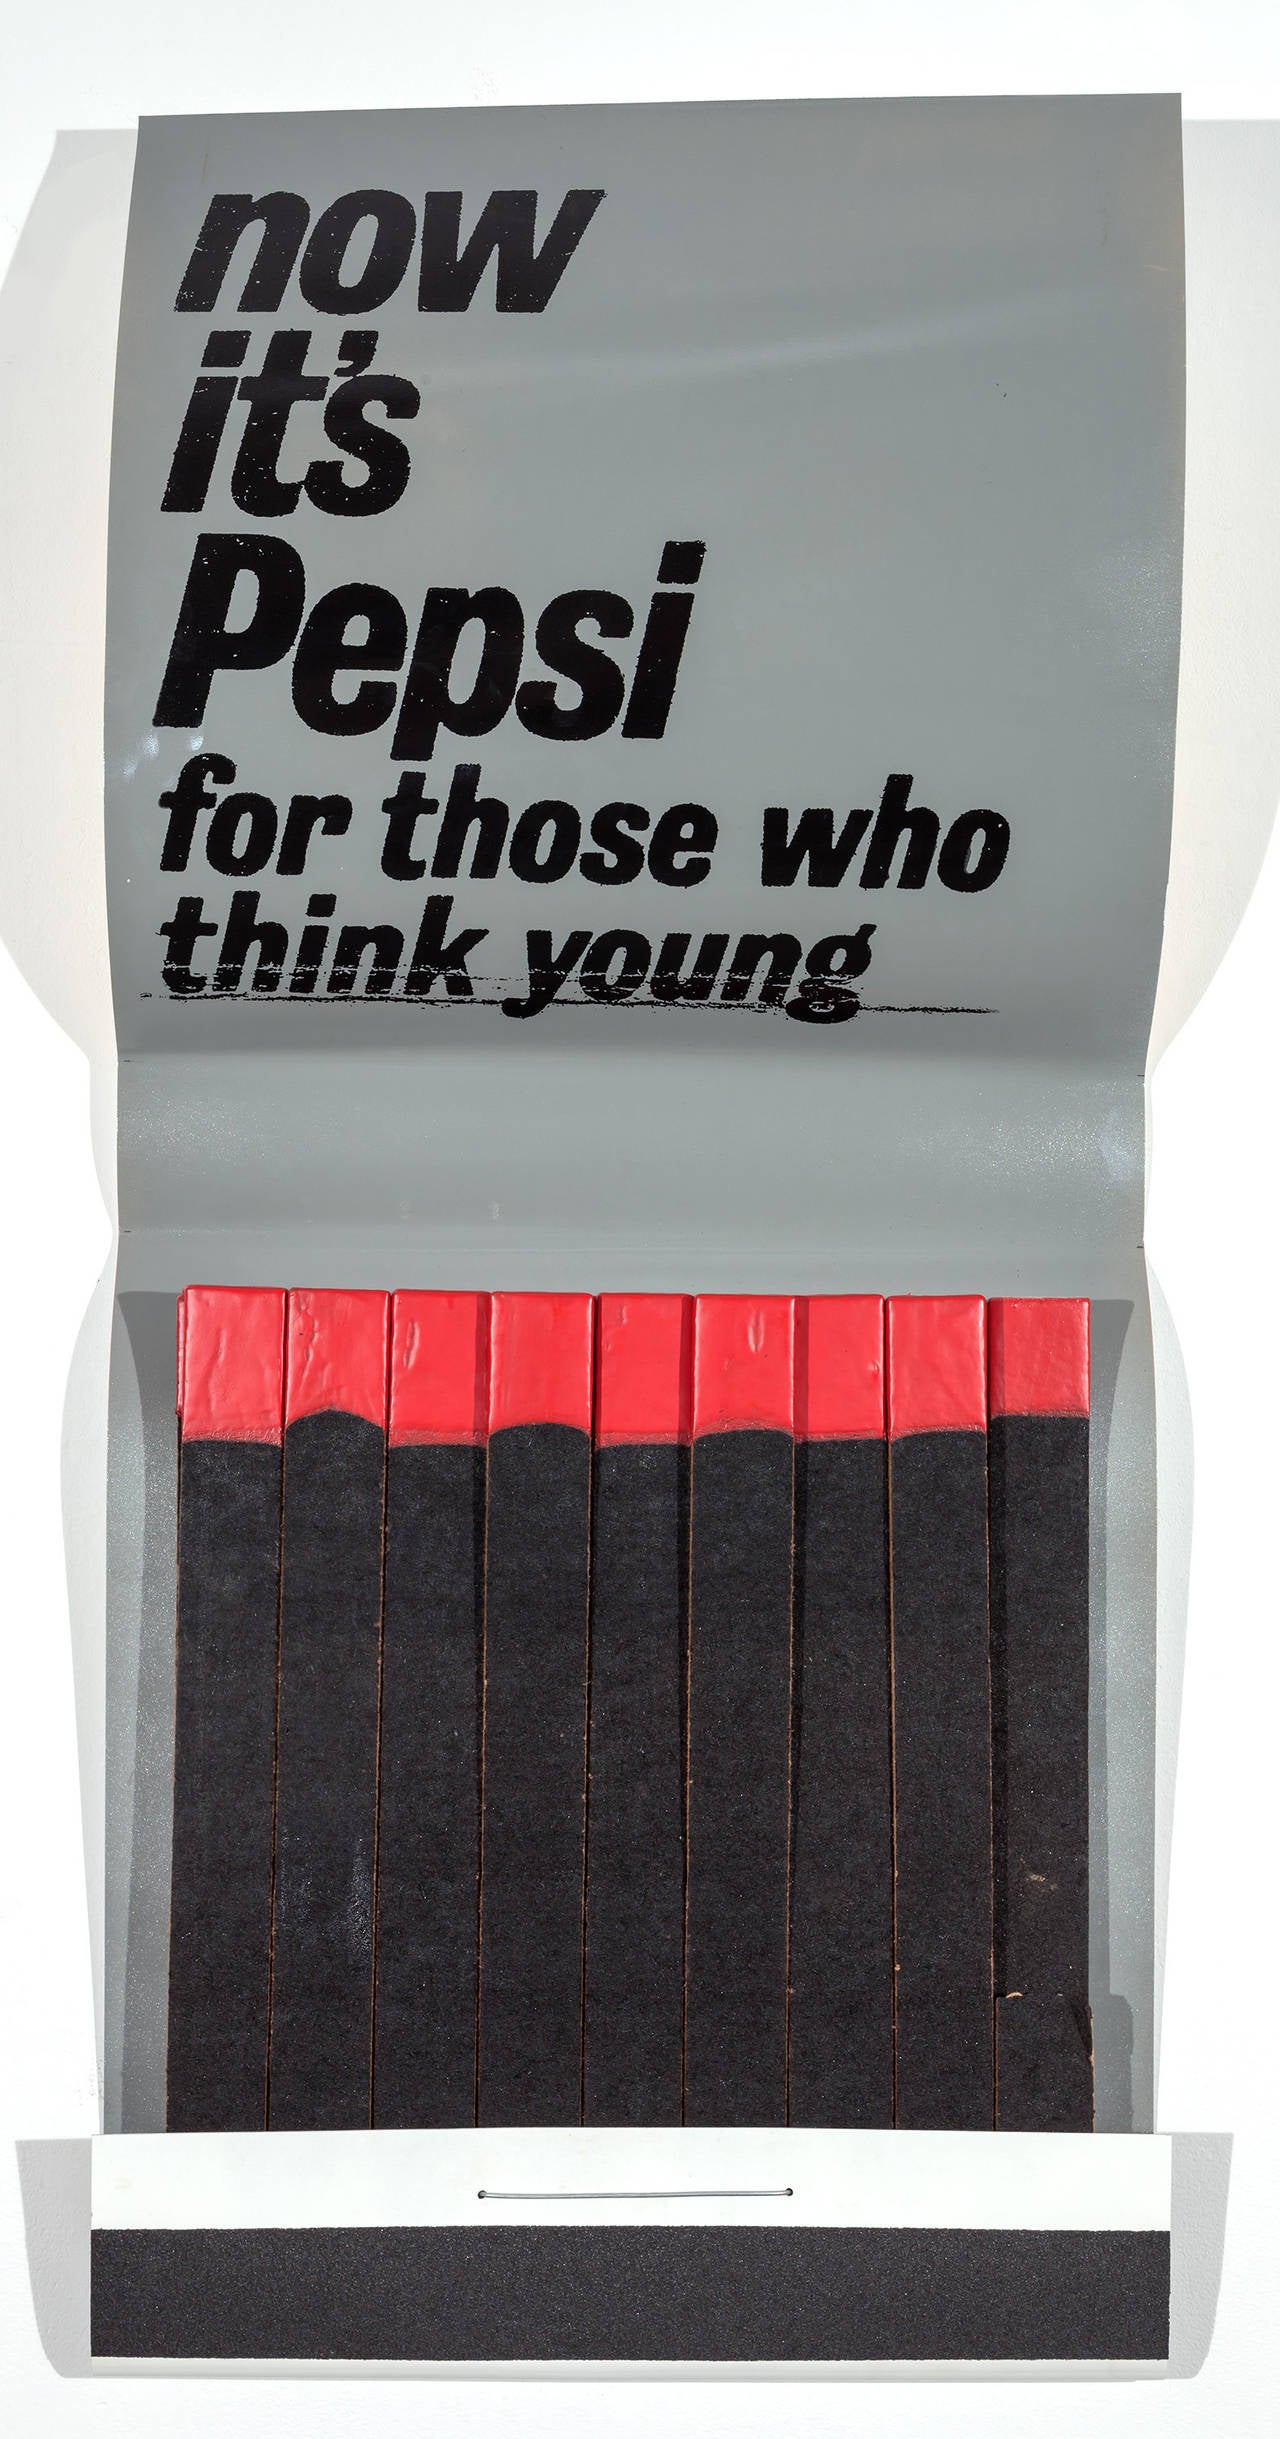 Pepsi (Think Young) - Pop Art Sculpture by Skylar Fein